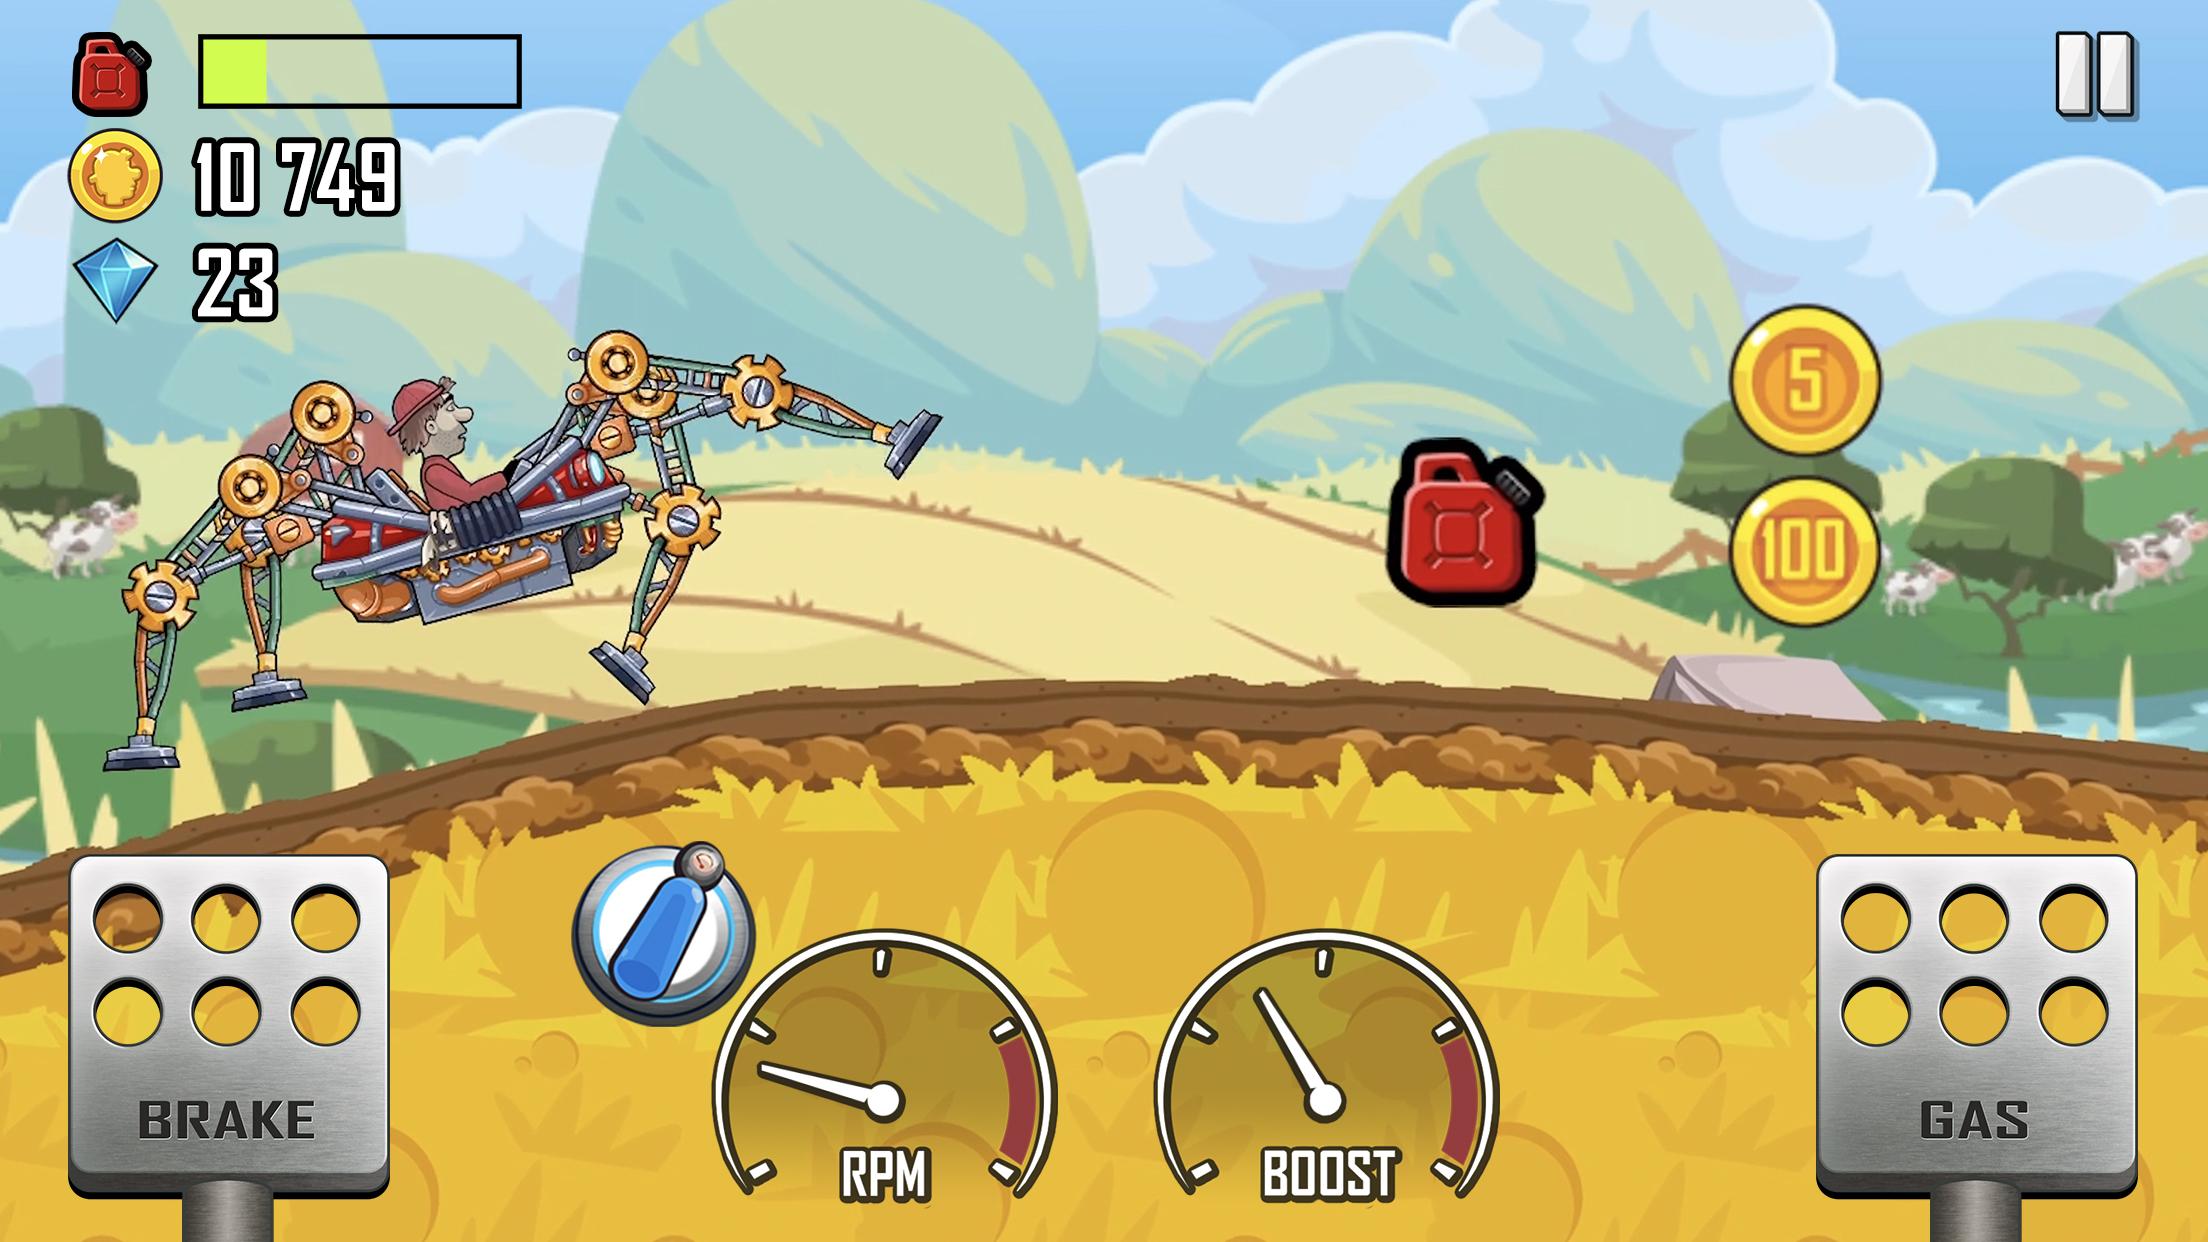 Hill Climb Racing Game On PC  Download free Hill Climb Racing on PC - Andy  - Android Emulator for PC & Mac